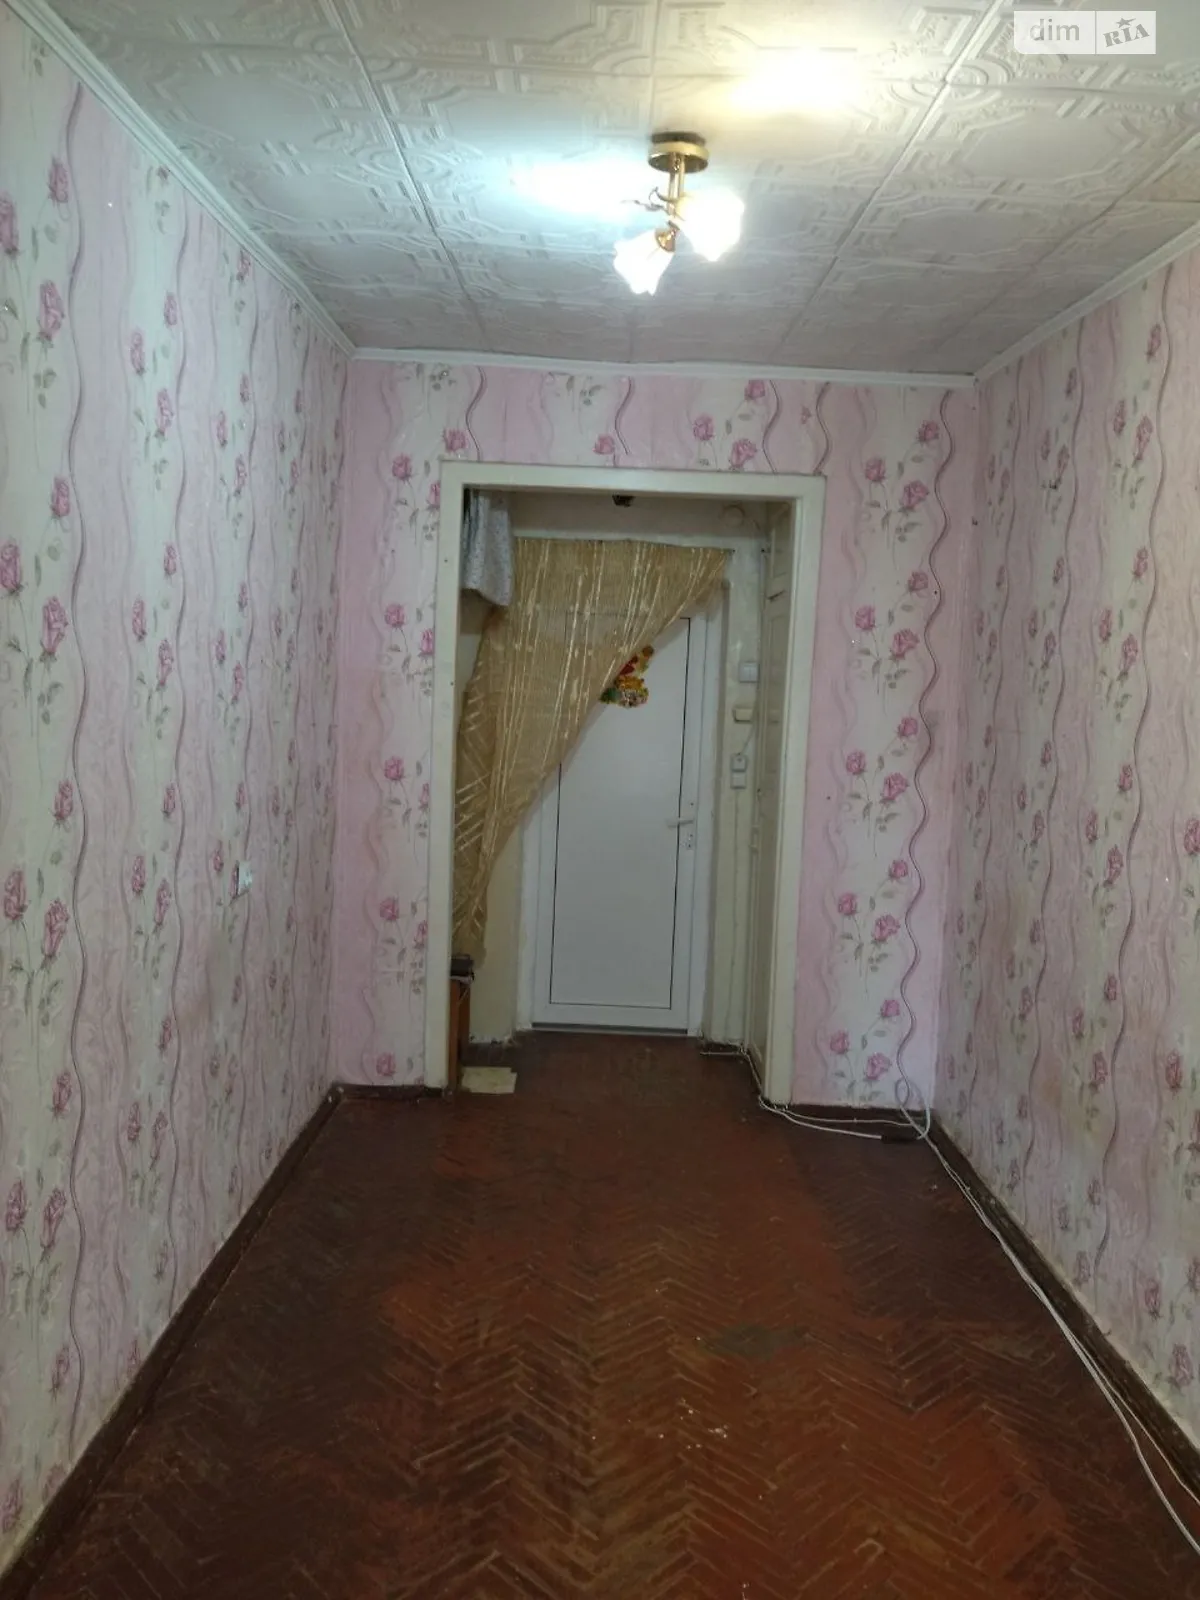 Продается комната 55 кв. м в Одессе, цена: 8500 $ - фото 1